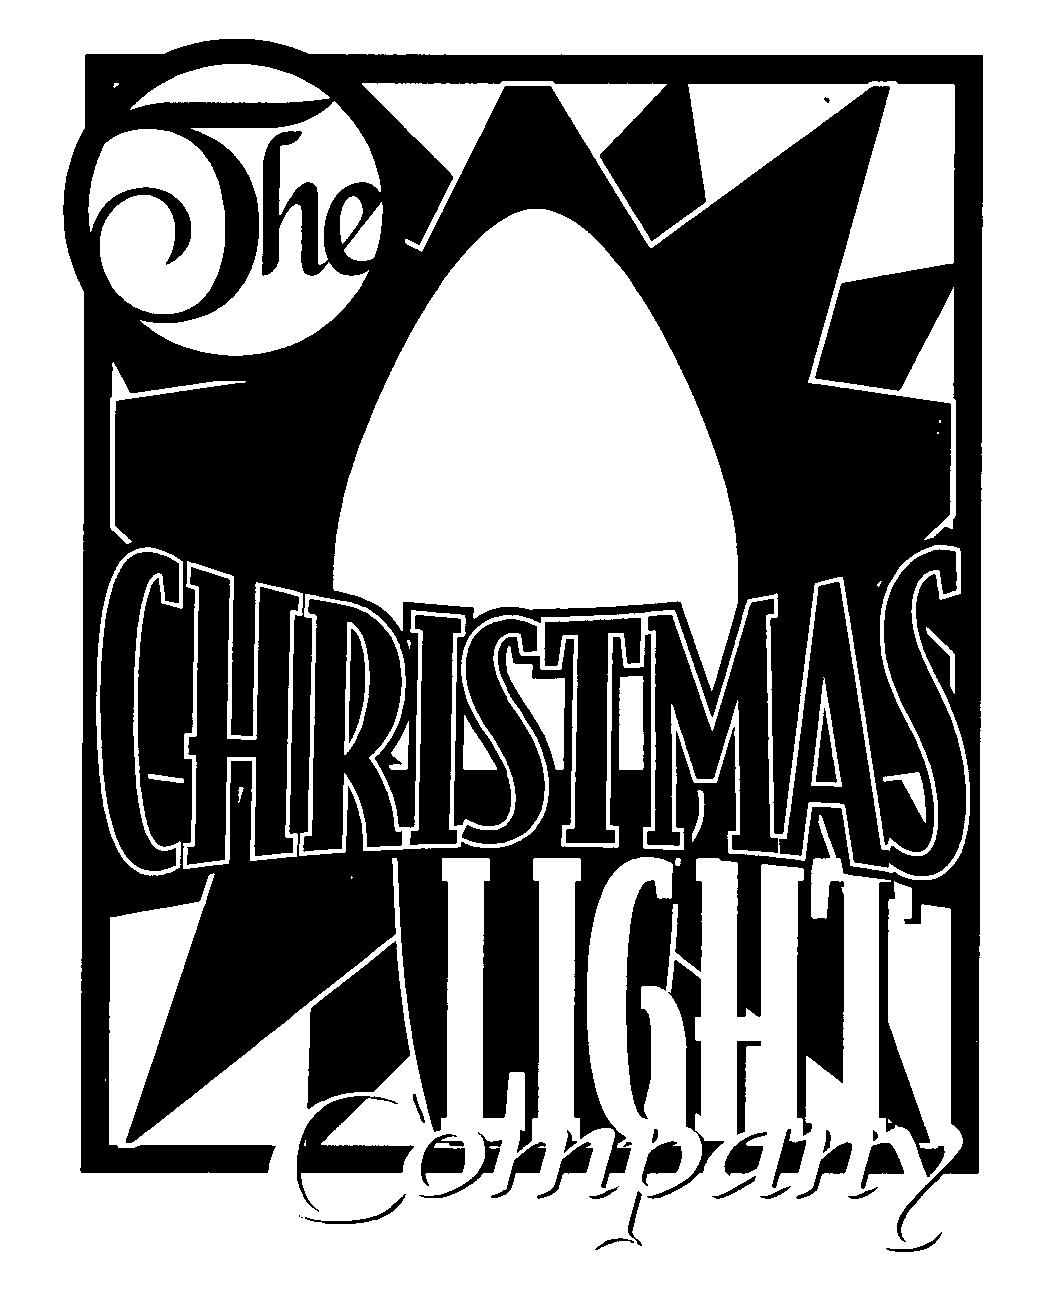  THE CHRISTMAS LIGHT COMPANY